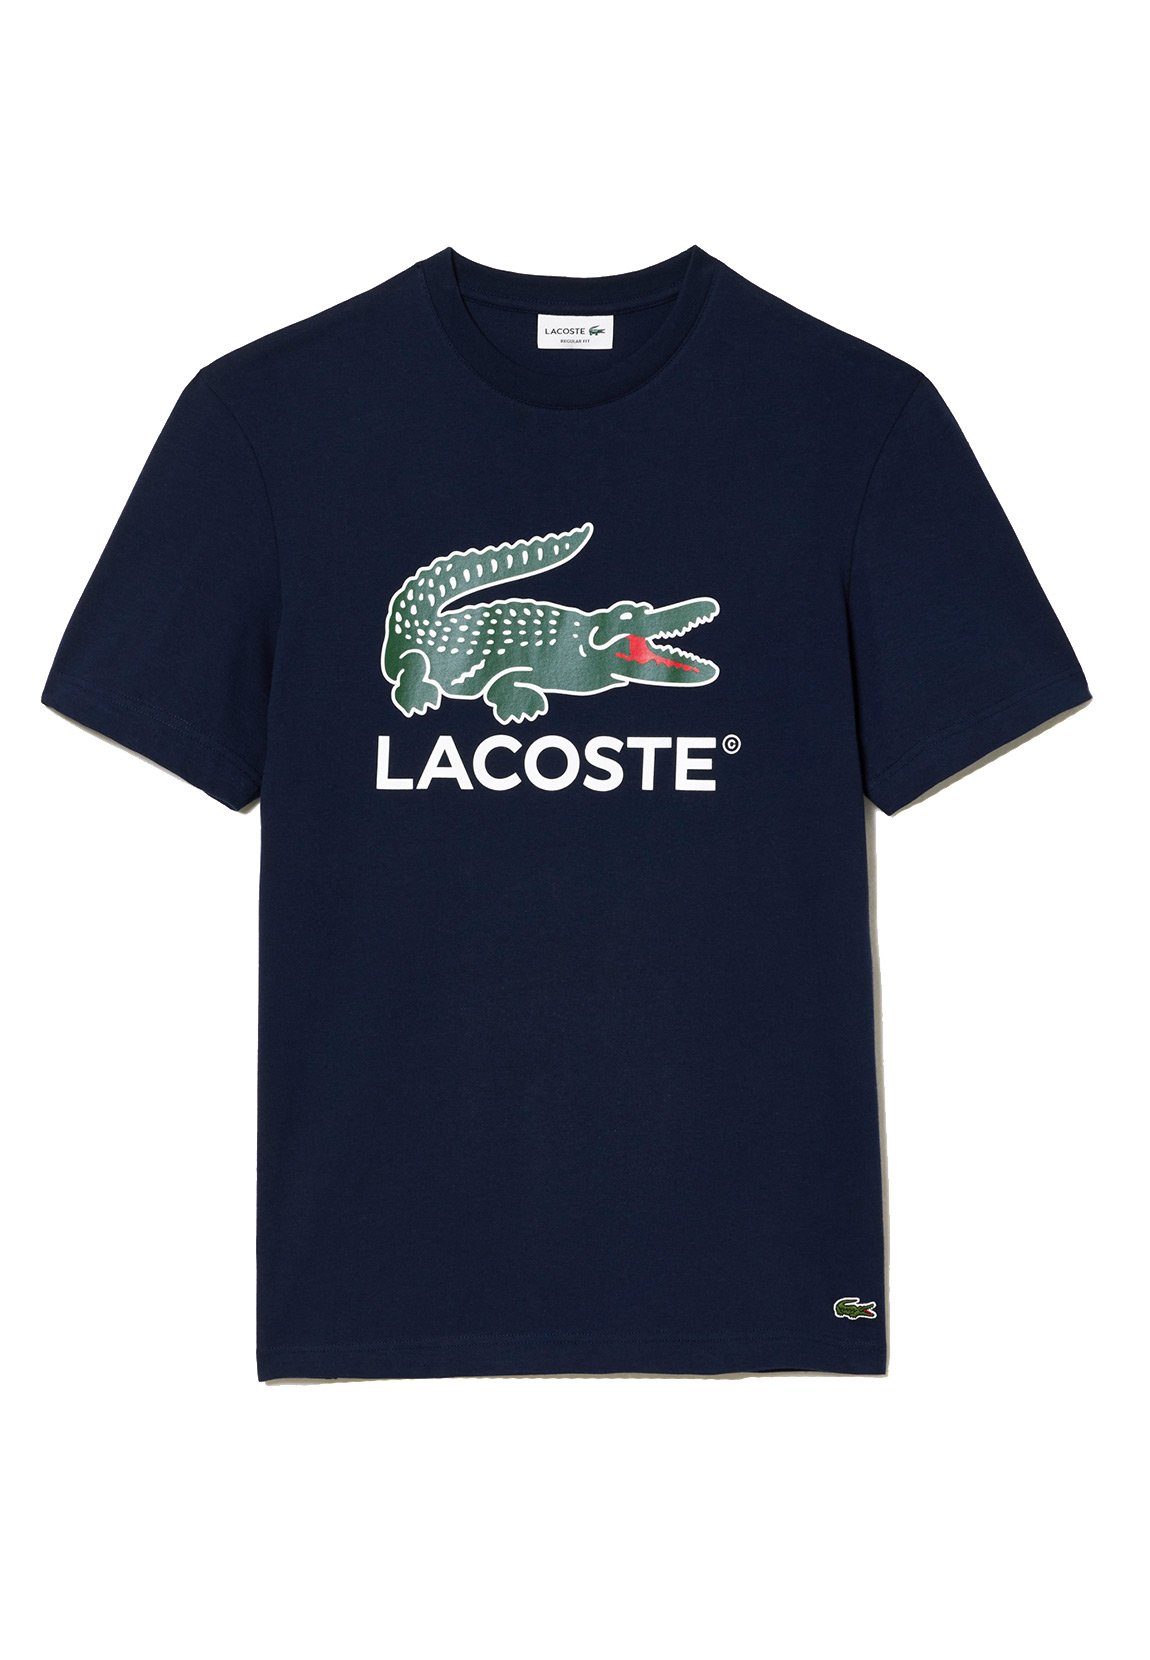 Lacoste T-Shirt Lacoste Herren TEE-SHIRT TH1285 166 Marine Dunkelblau navy blue